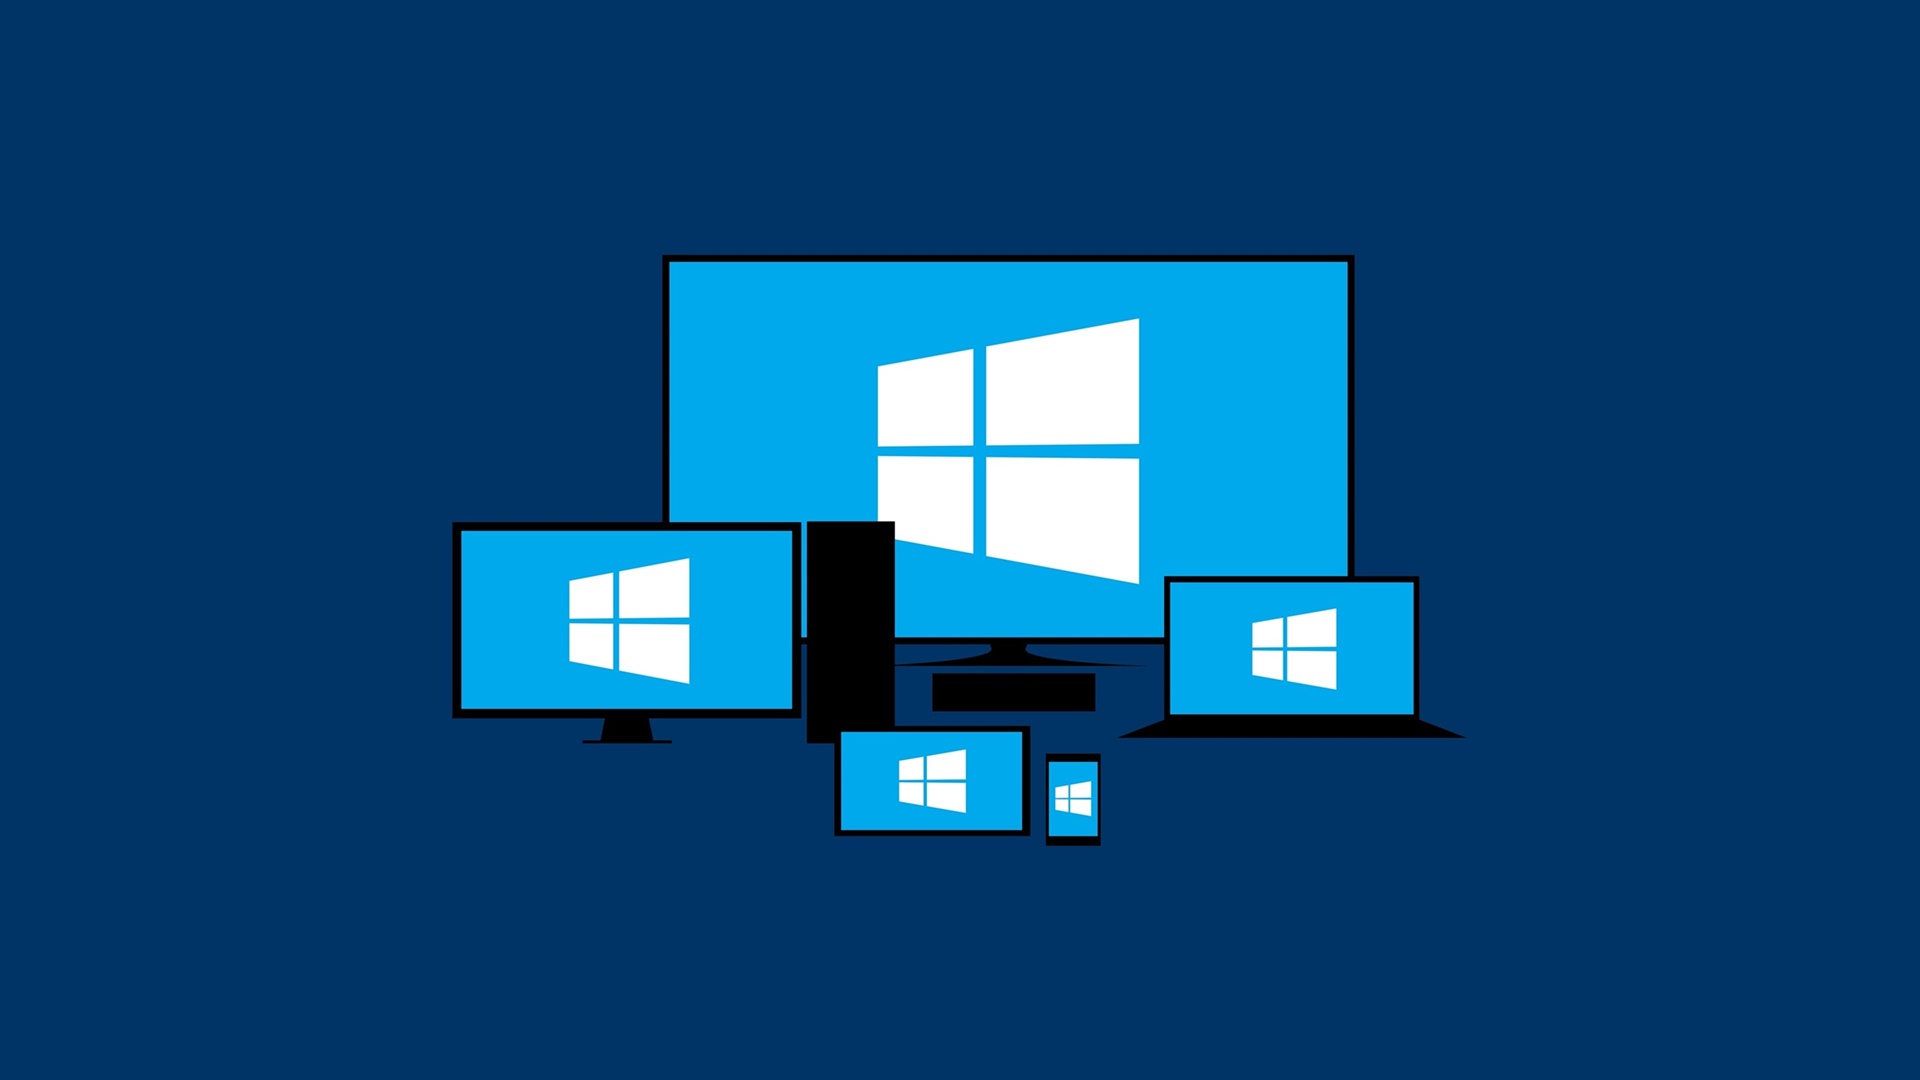 Windows 10 No Lag - 1920x1080 Wallpaper 